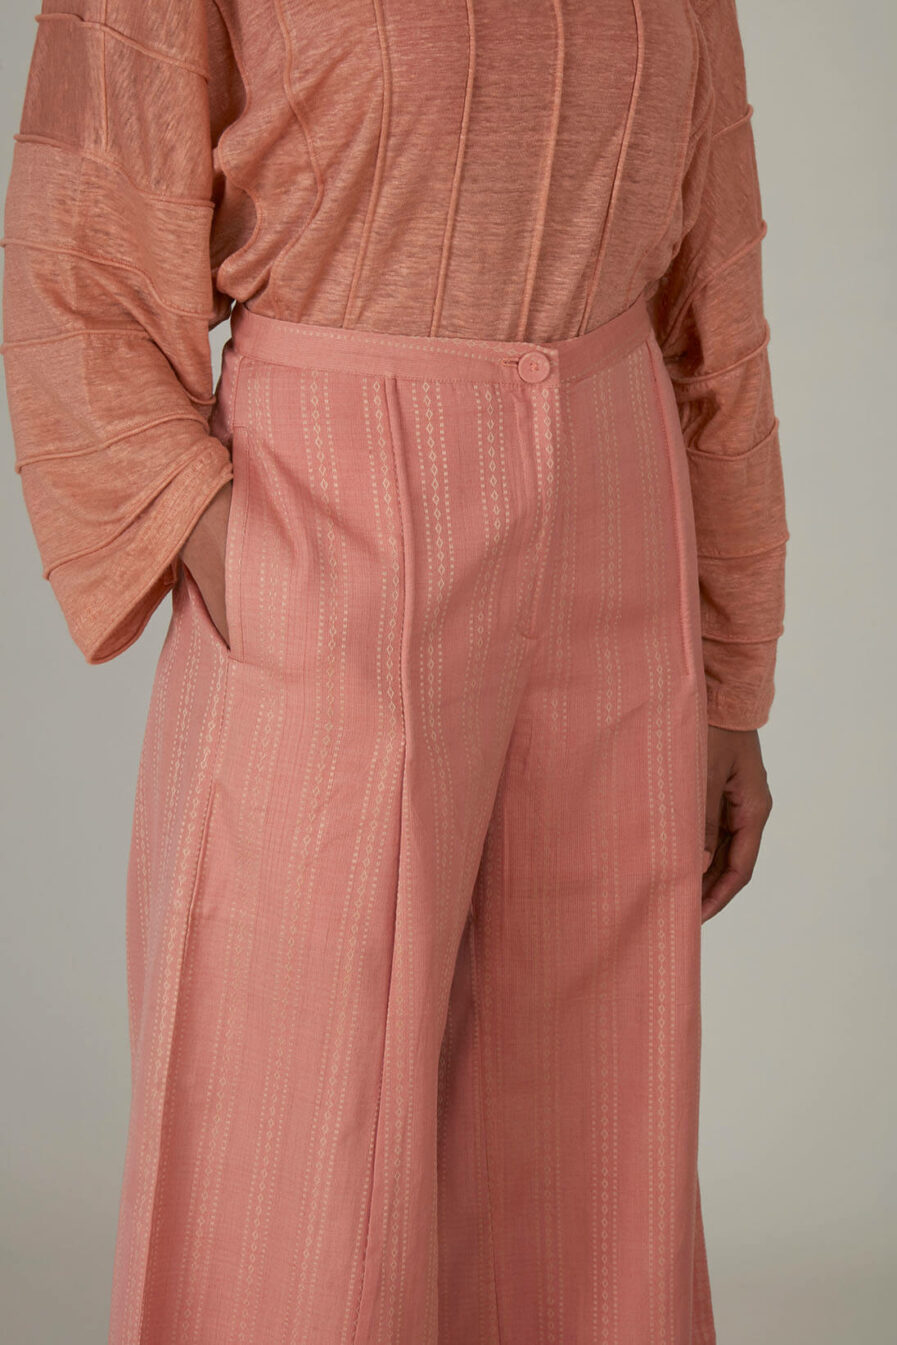 Anavila Peach Organic Trouser